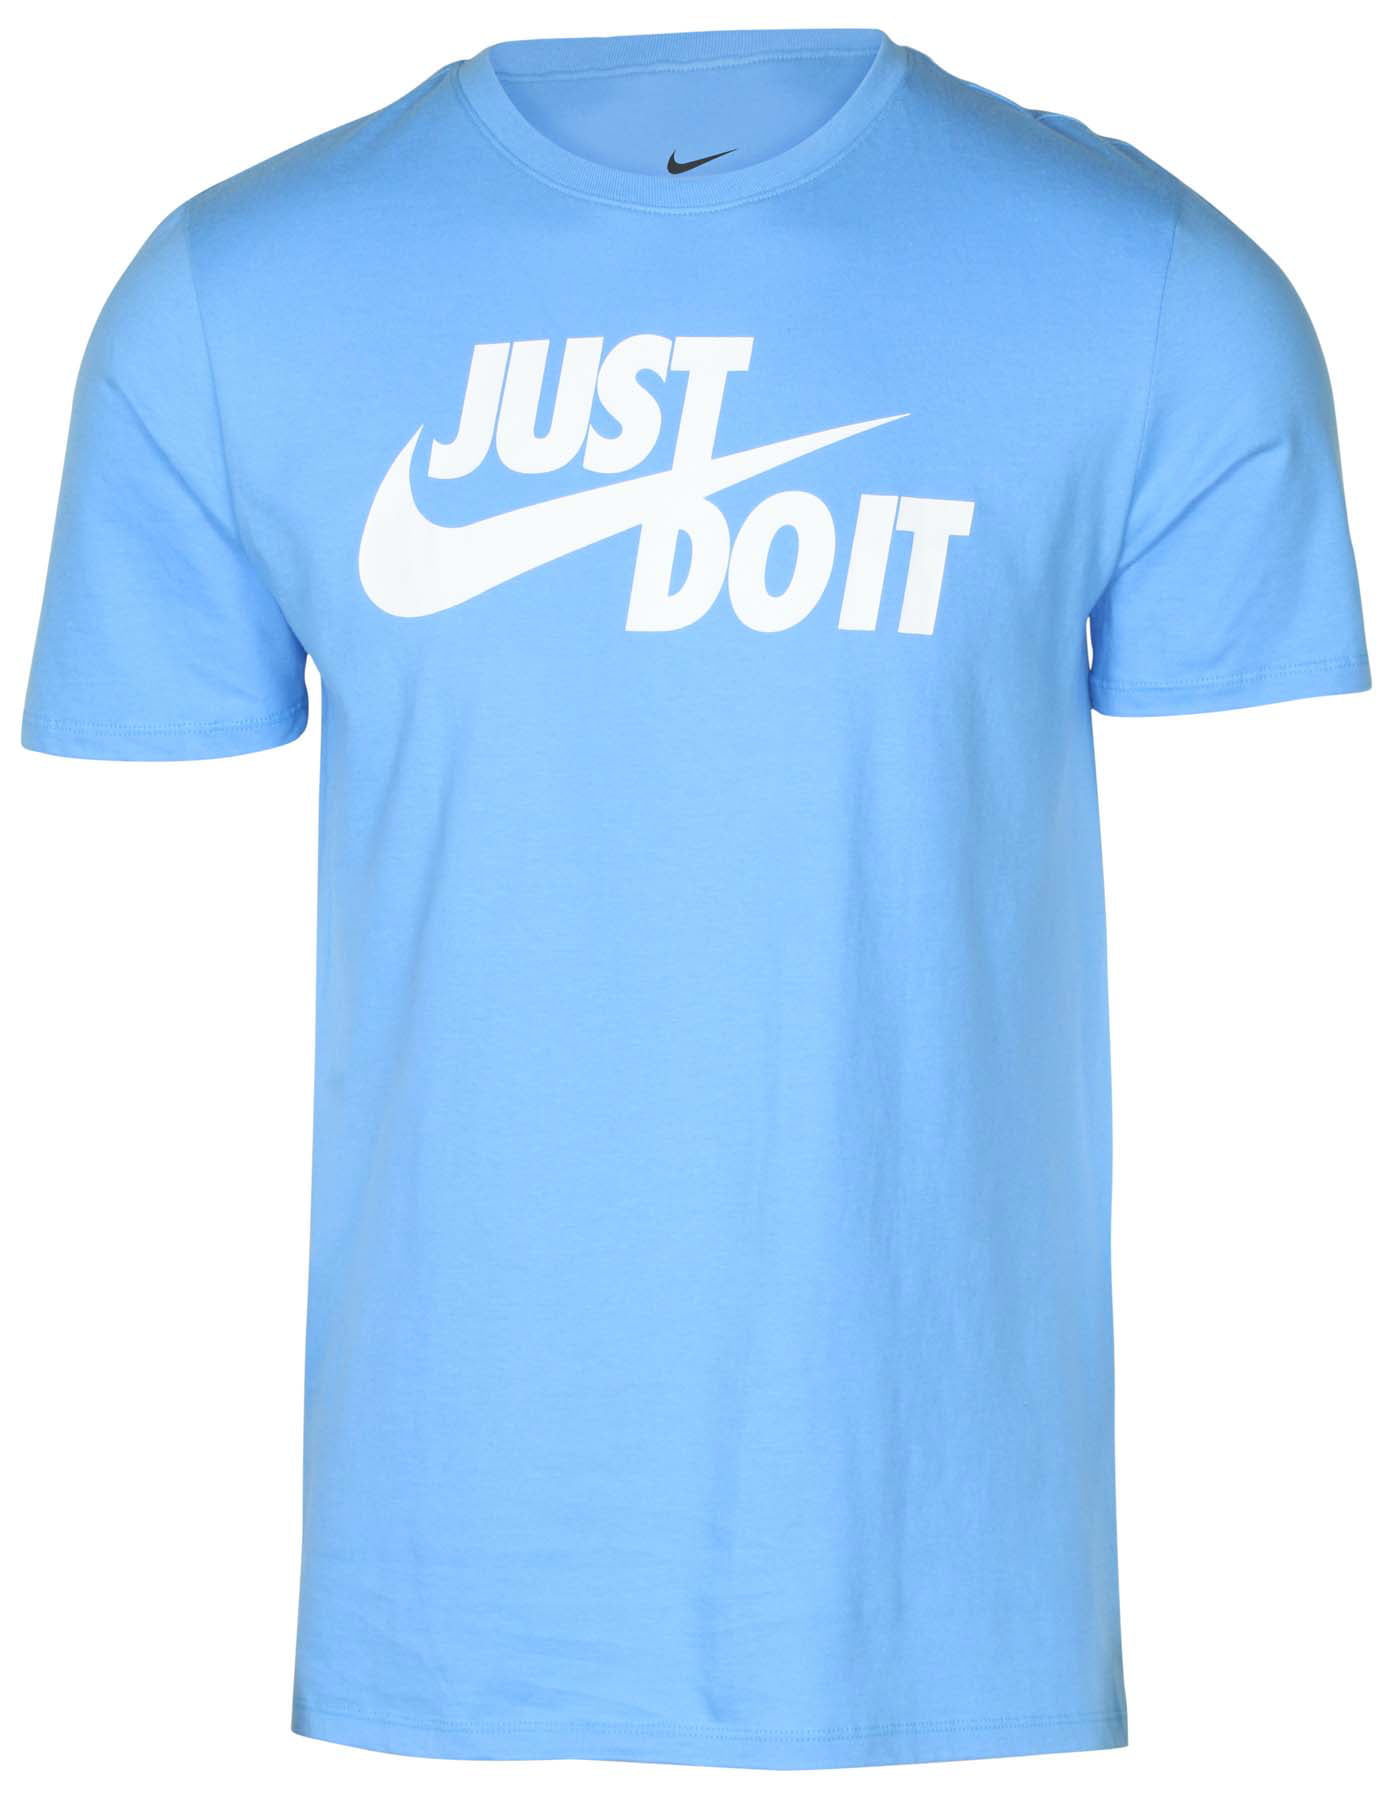 Swoosh Graphic T-Shirt-Sky Blue 